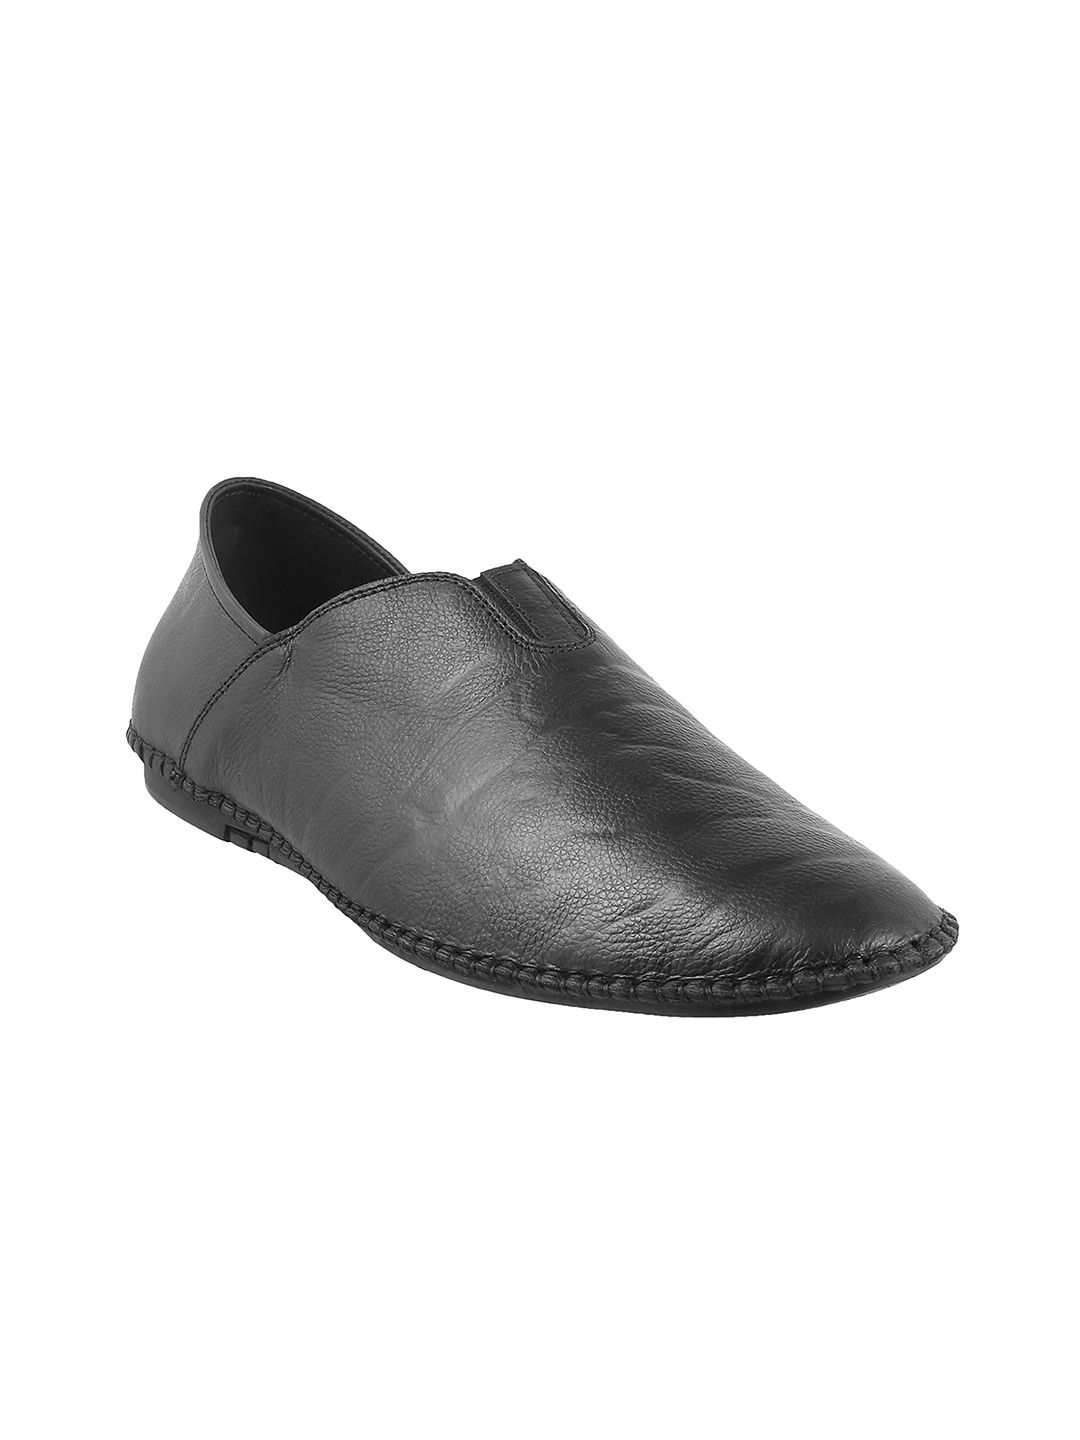     			METRO Slip On Genuine Leather BLACK Formal Shoes